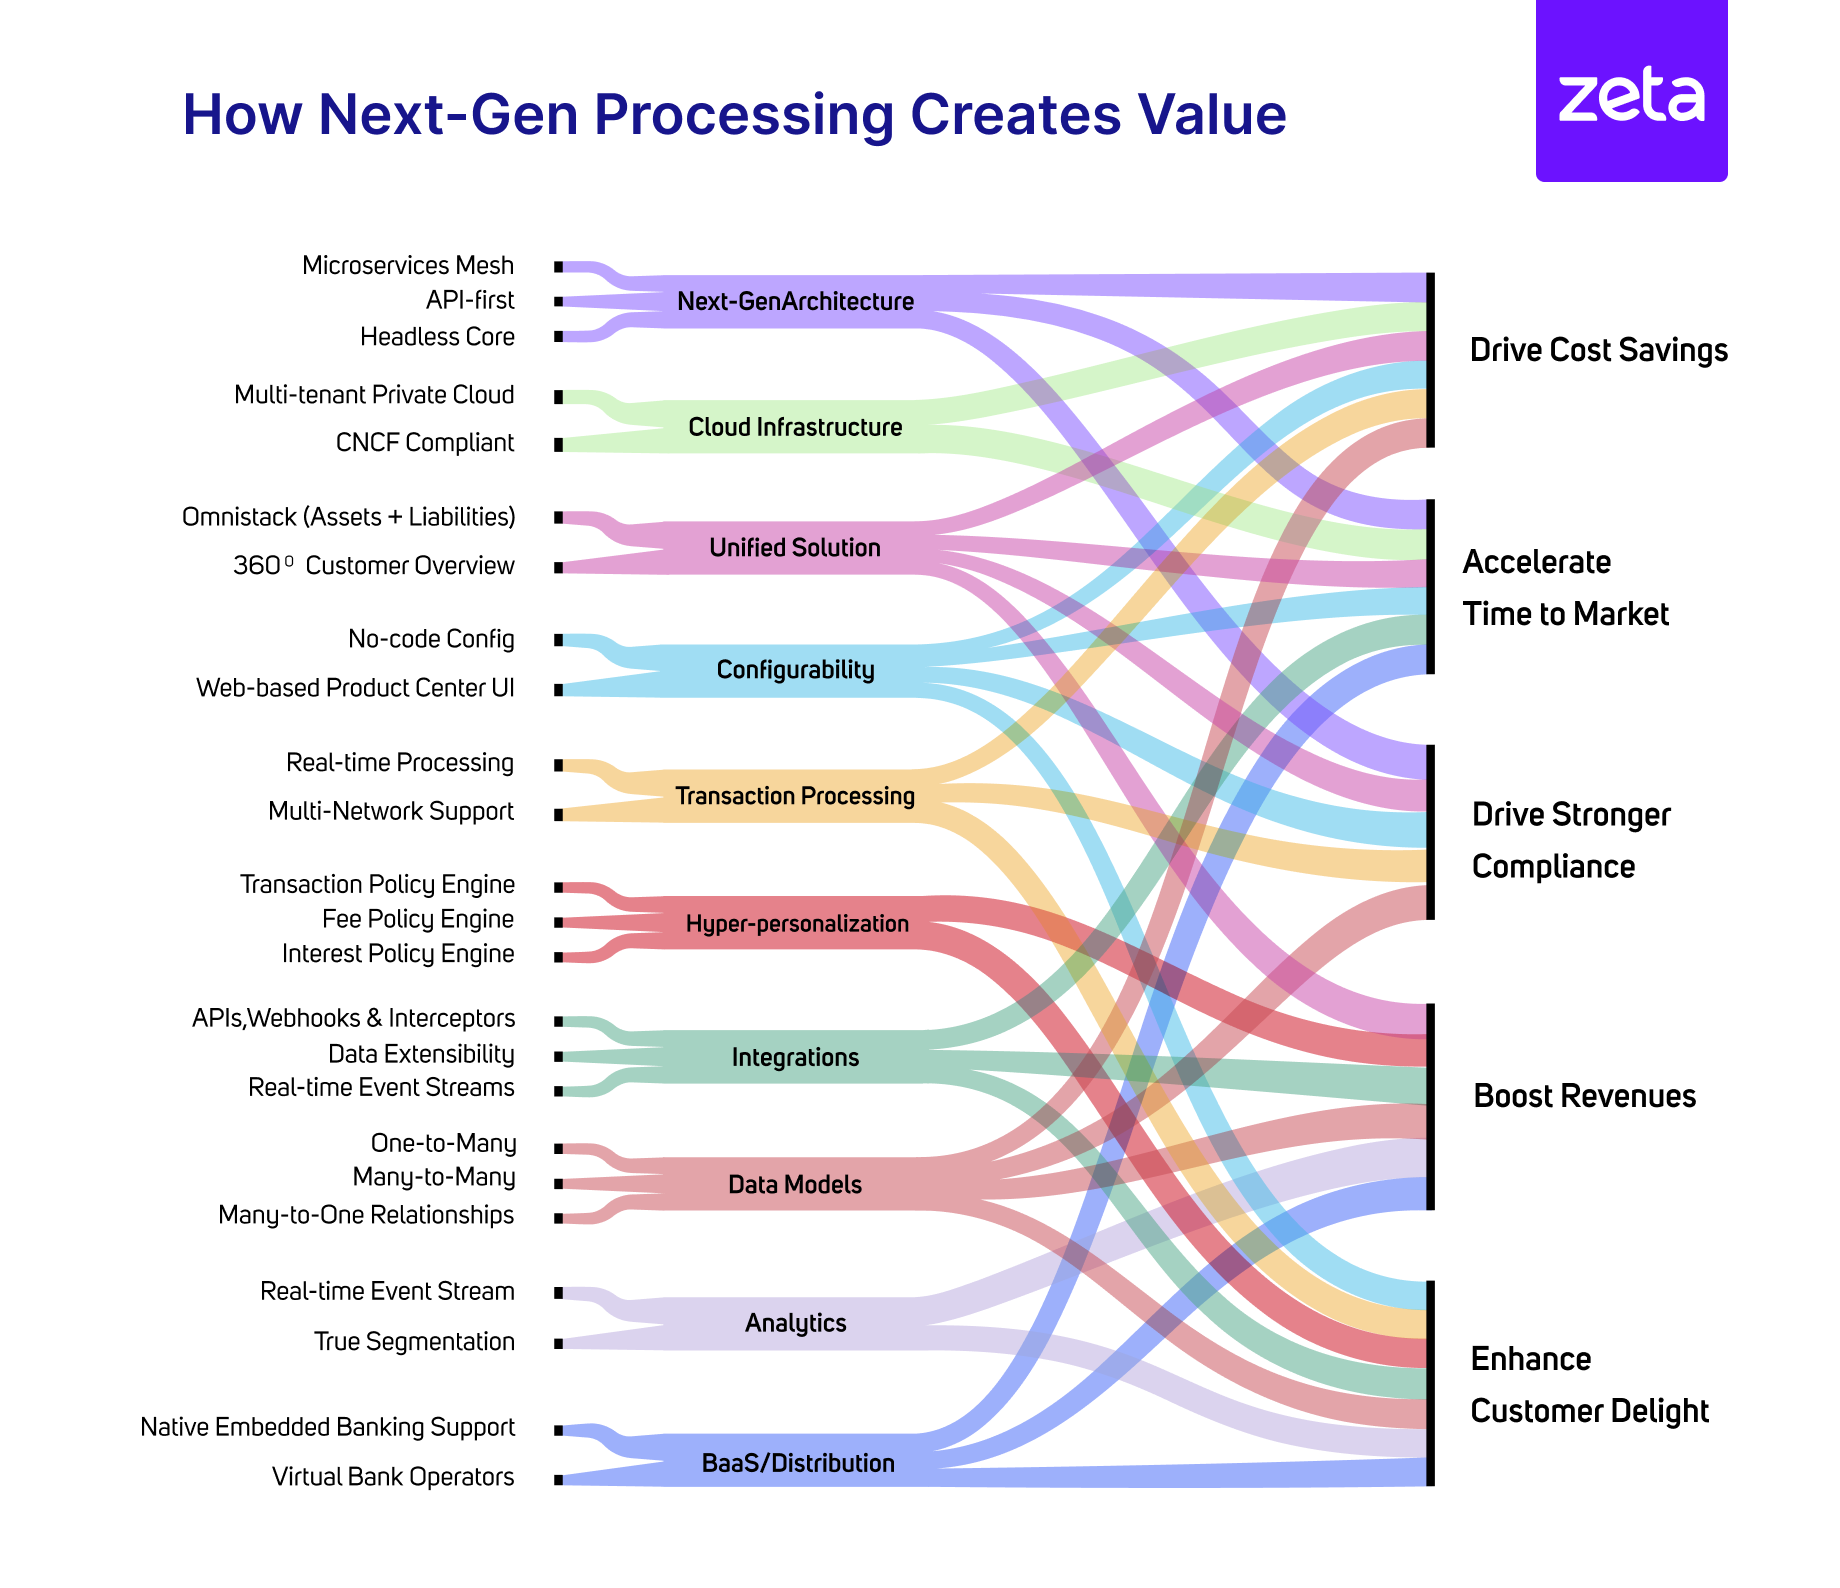 Bild 1: Next-Gen Processing Value Creation Framework